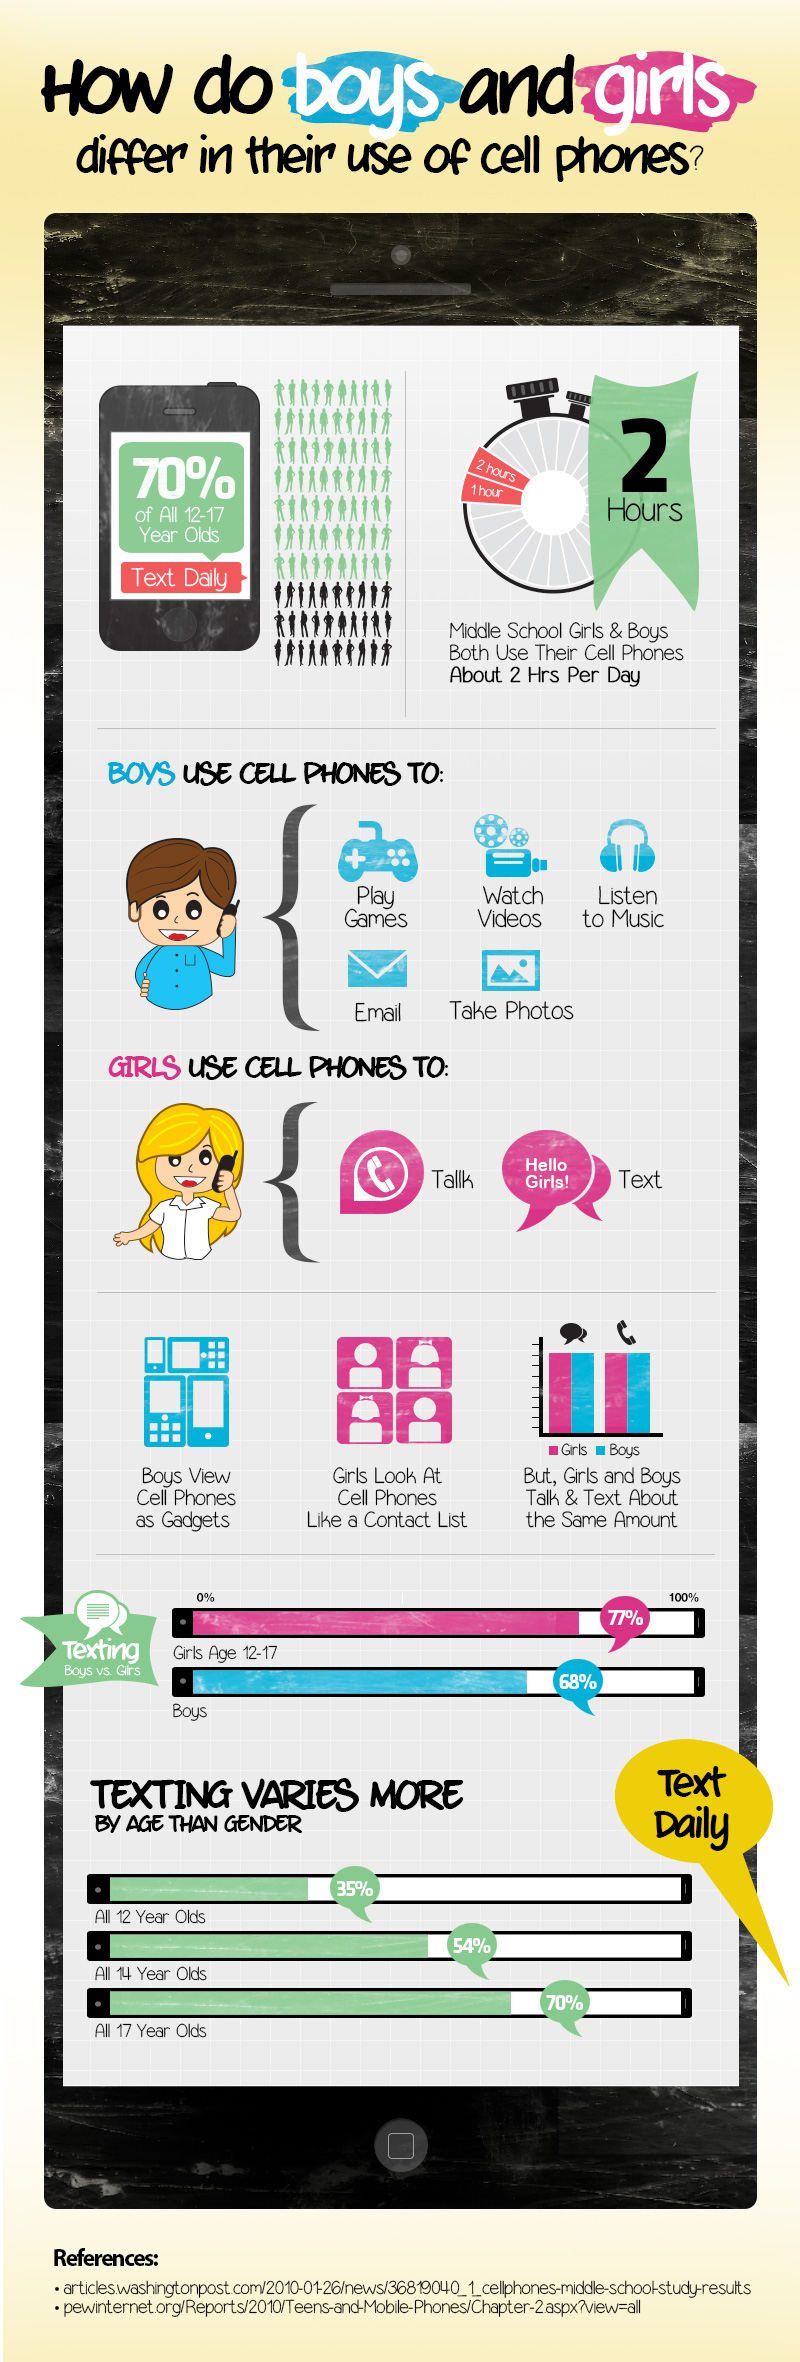 Cell-Phone-Use-Girls-vs-Boys